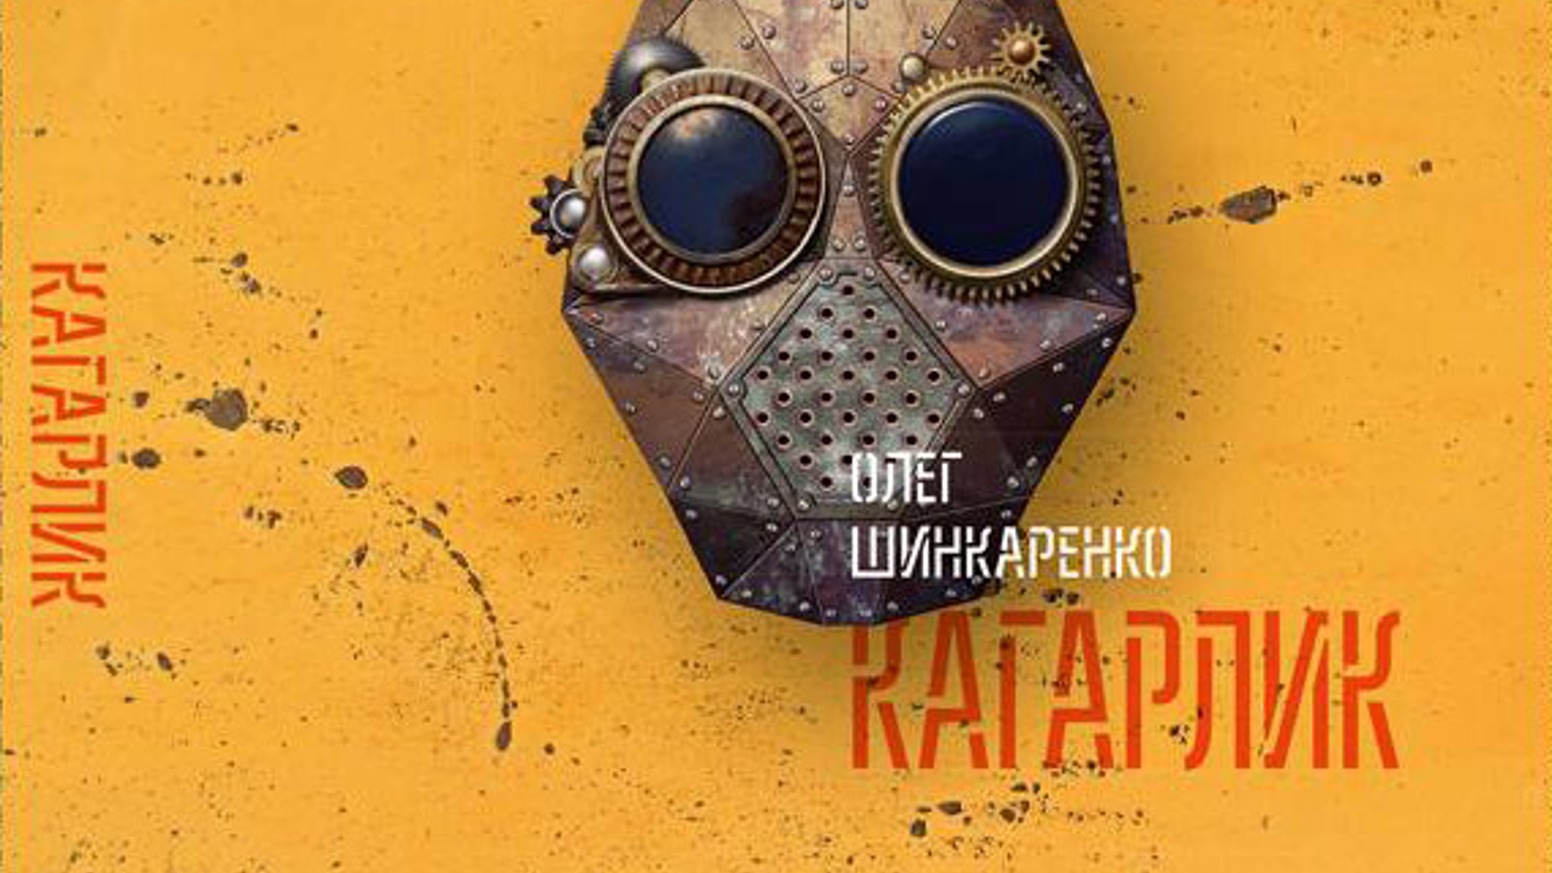 Helping Ukraine's voice be heard by translating novels into English, beginning with Oleh Shynkarenko's crazy, brilliant "Kaharlyk"